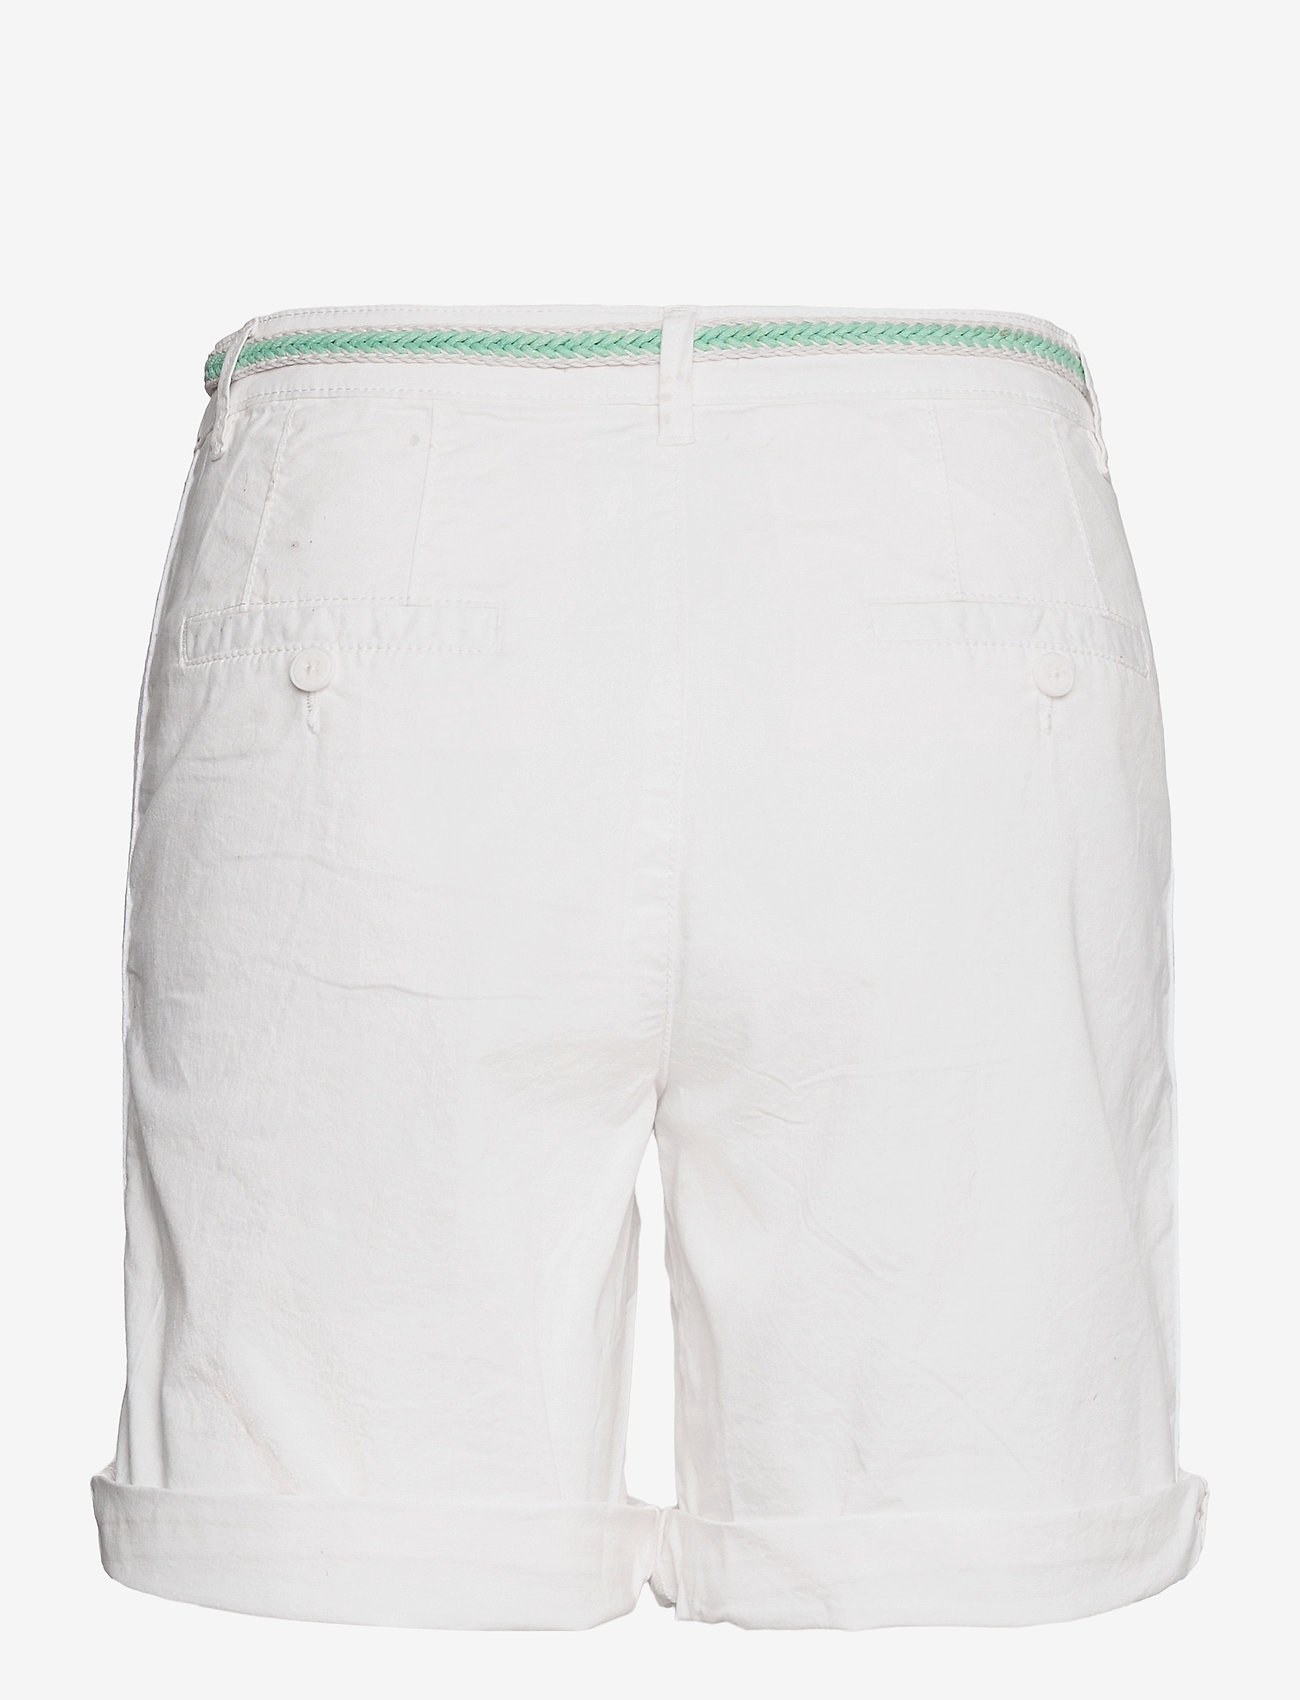 Esprit Casual - Shorts woven - chino shorts - white - 1